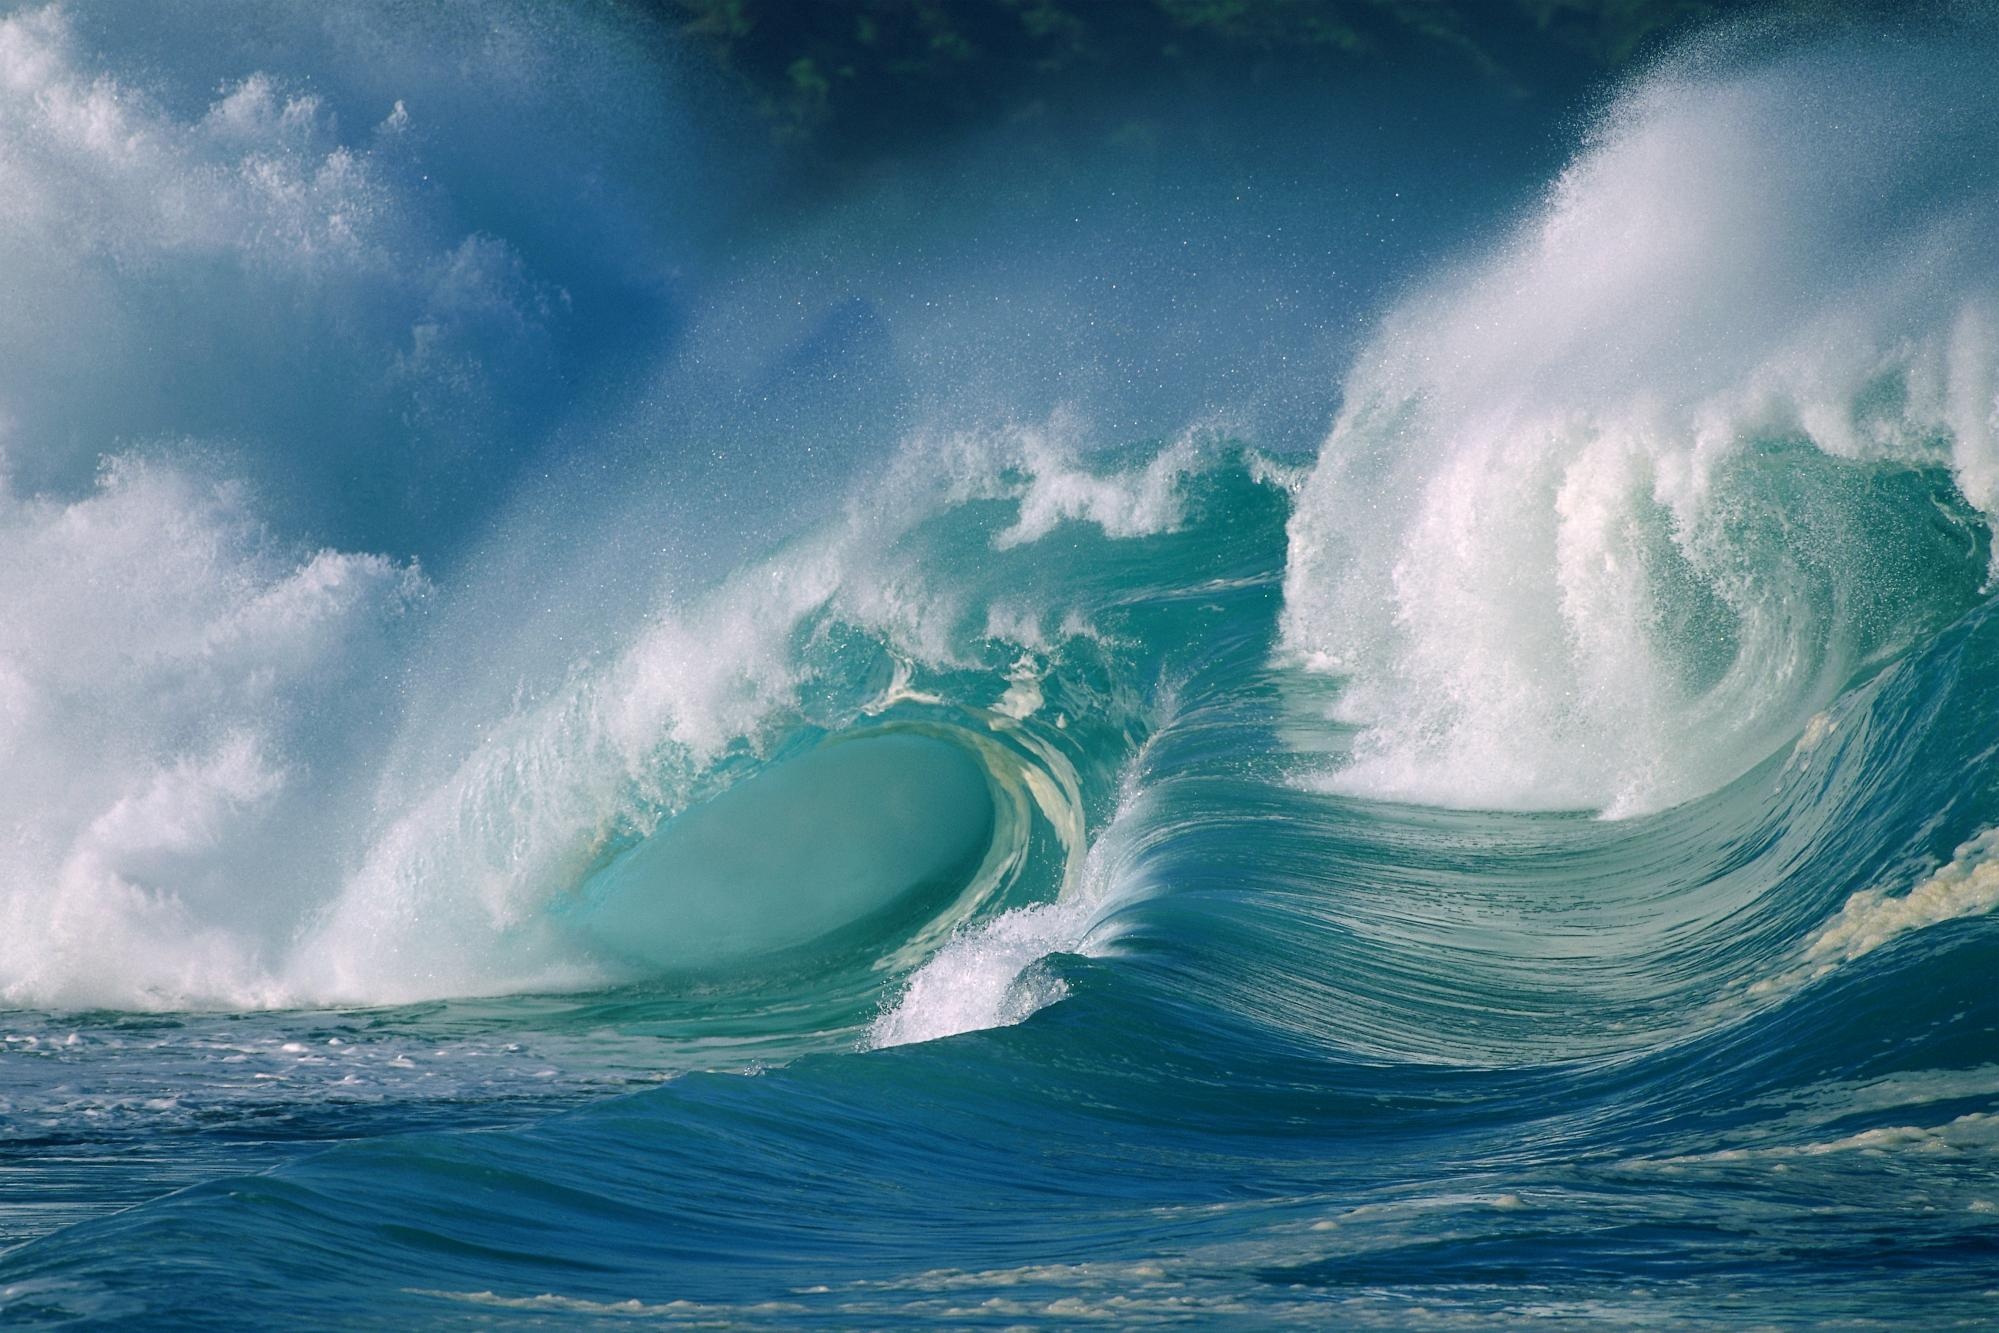 Pacific Ocean, Ocean wallpapers, Digital landscapes, Nature's tranquility, 2000x1340 HD Desktop